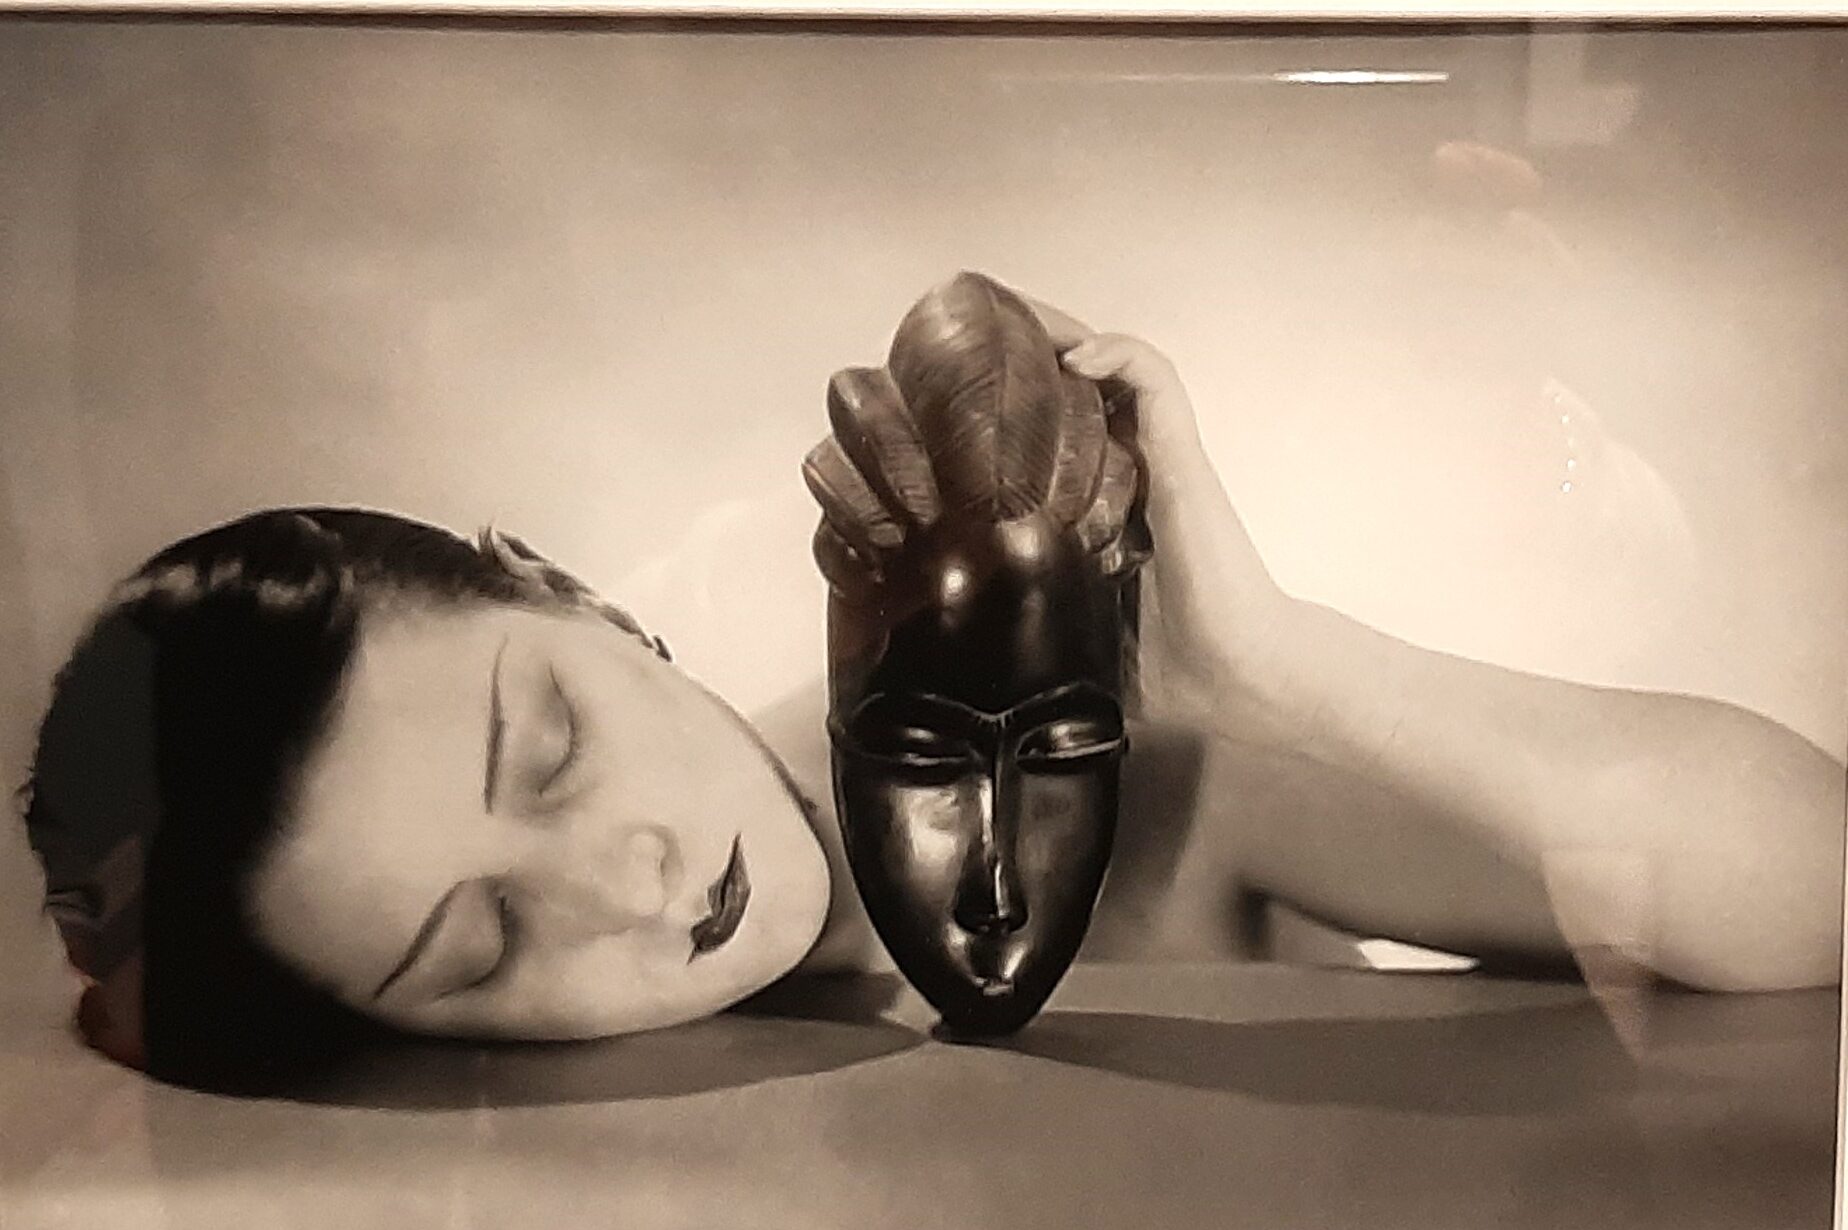 Fotografías Icónicas de Man Ray se exhiben en el Museo Carmen Thyssen Málaga